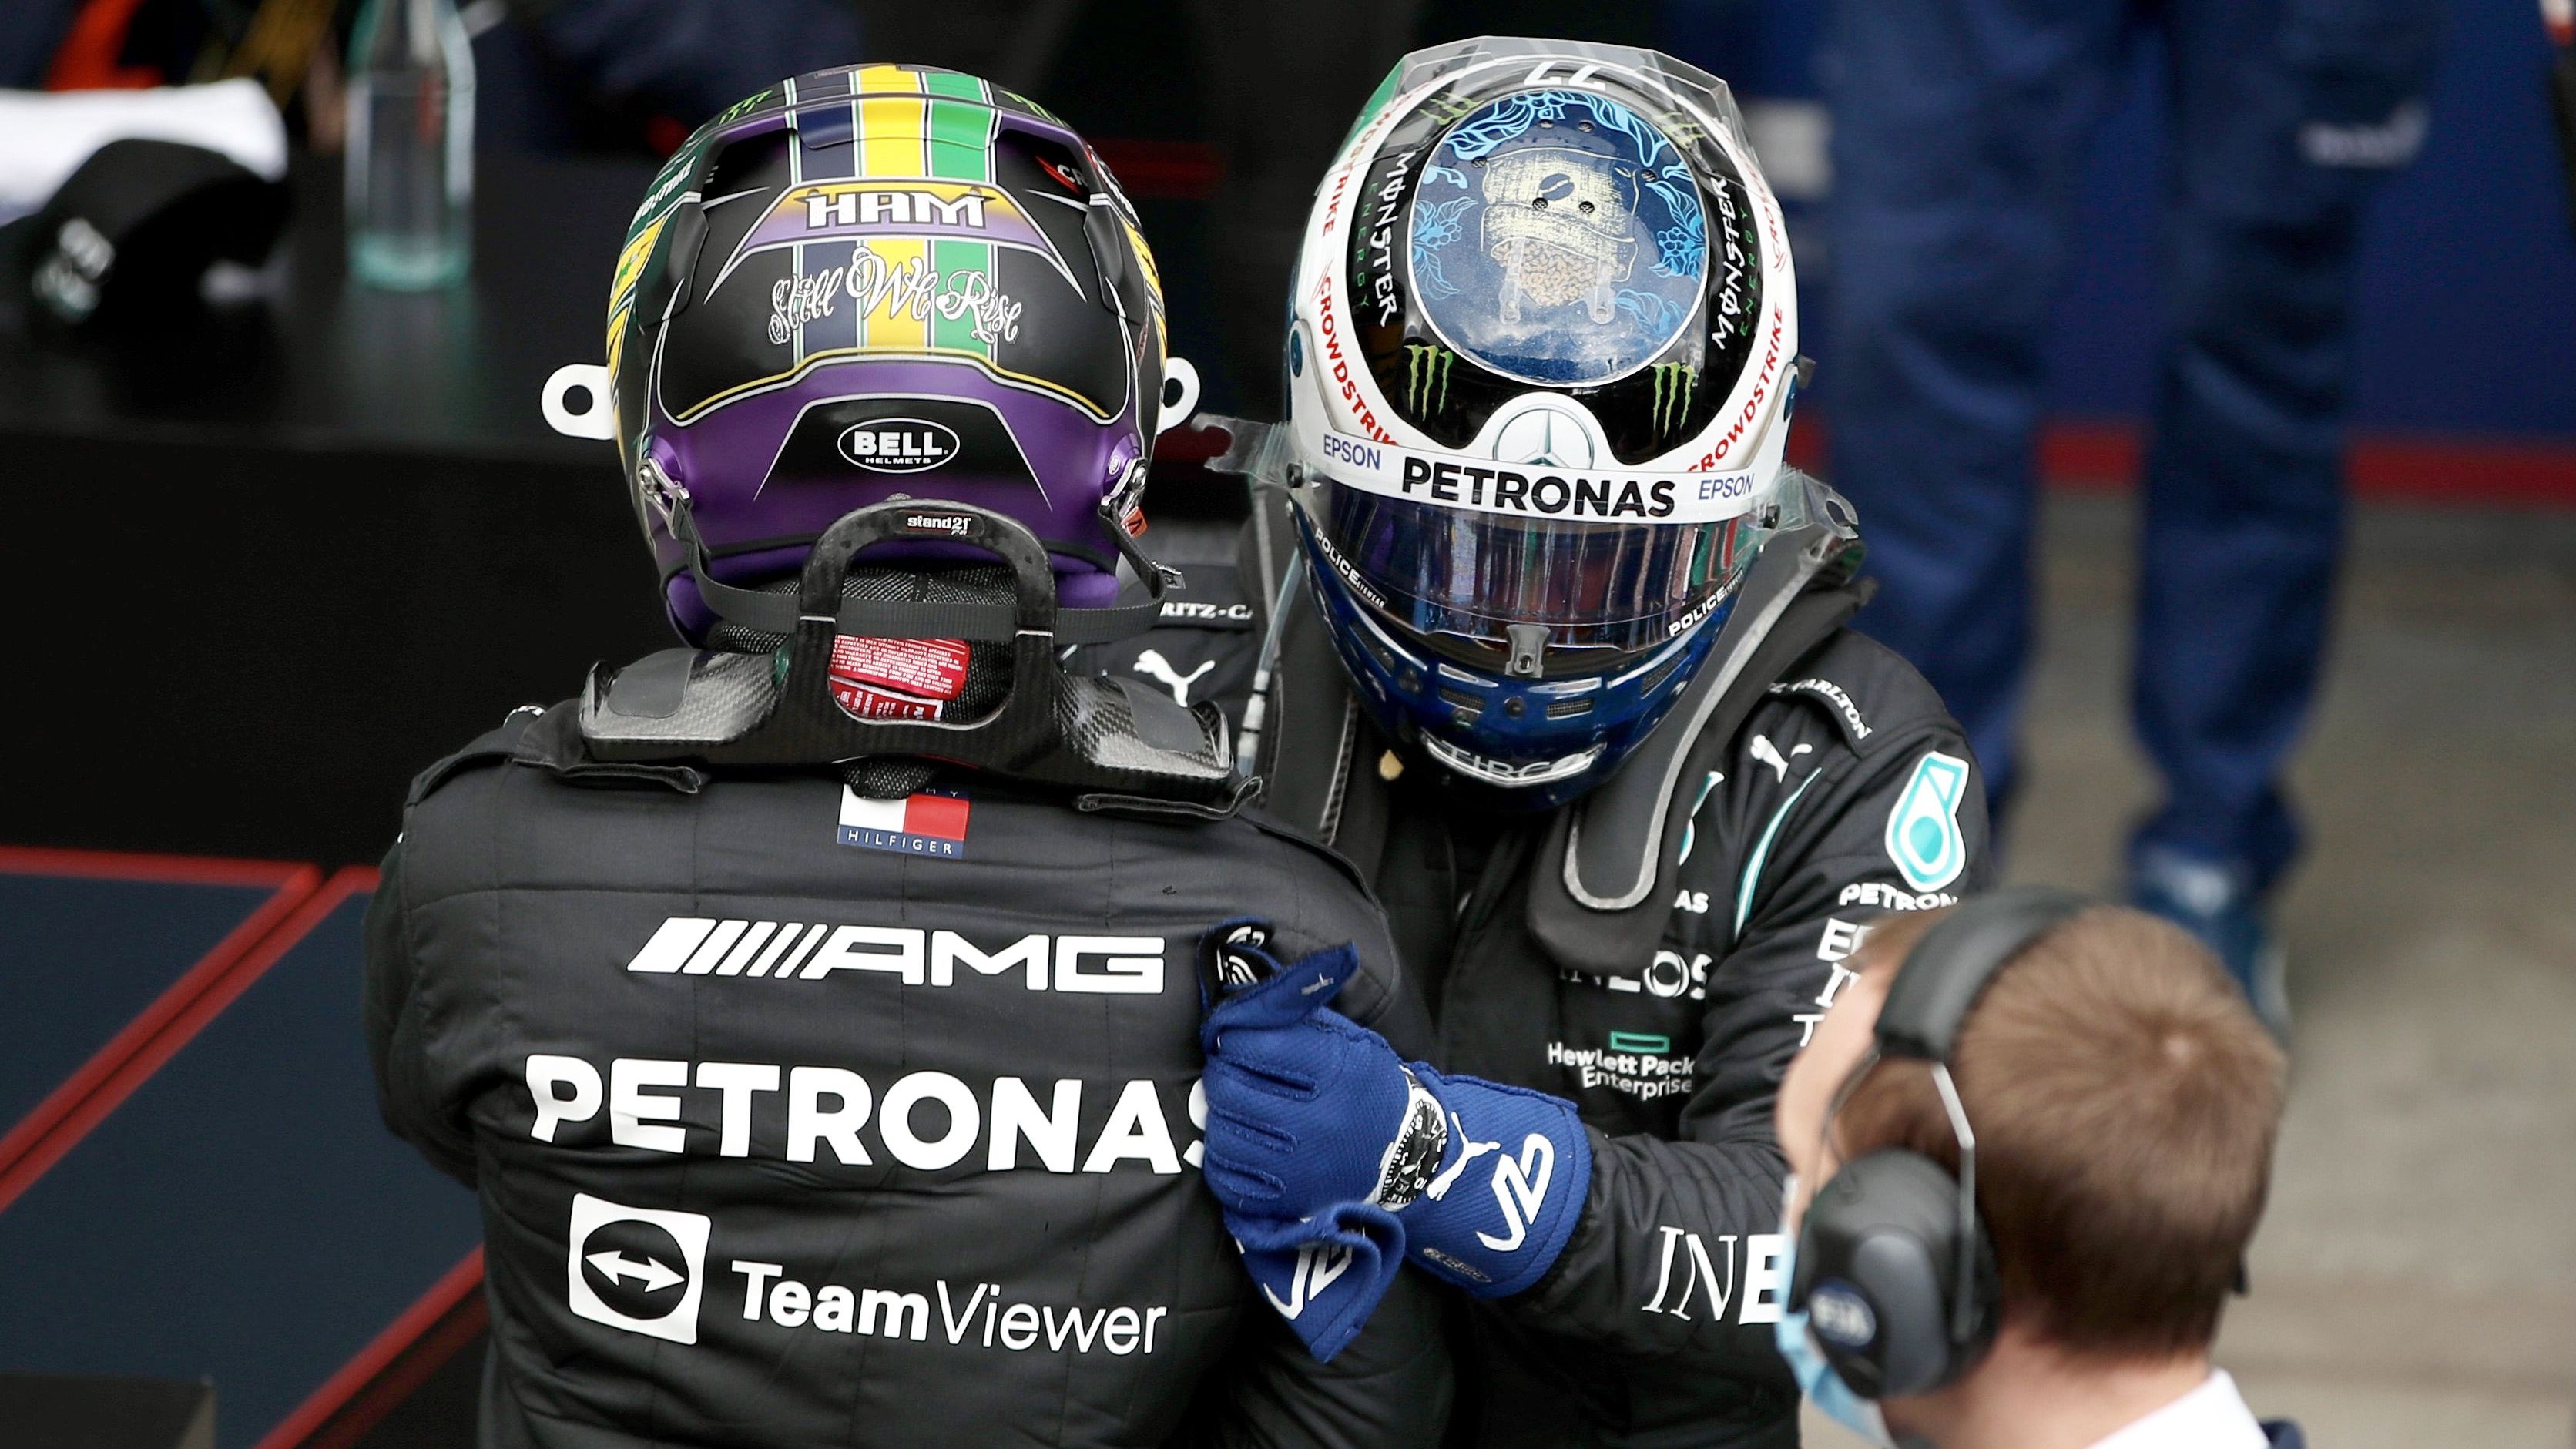 Duo pembalap Mercedes-AMG Petronas, Lewis Hamilton (kiri) dan Valtteri Bottas (kanan), berangkulan setelah sesi kualifikasi F1 GP Sao Paulo 2021 yang digelar di Sirkuit Interlagos pada Sabtu (13/11/2021) dini hari WIB.